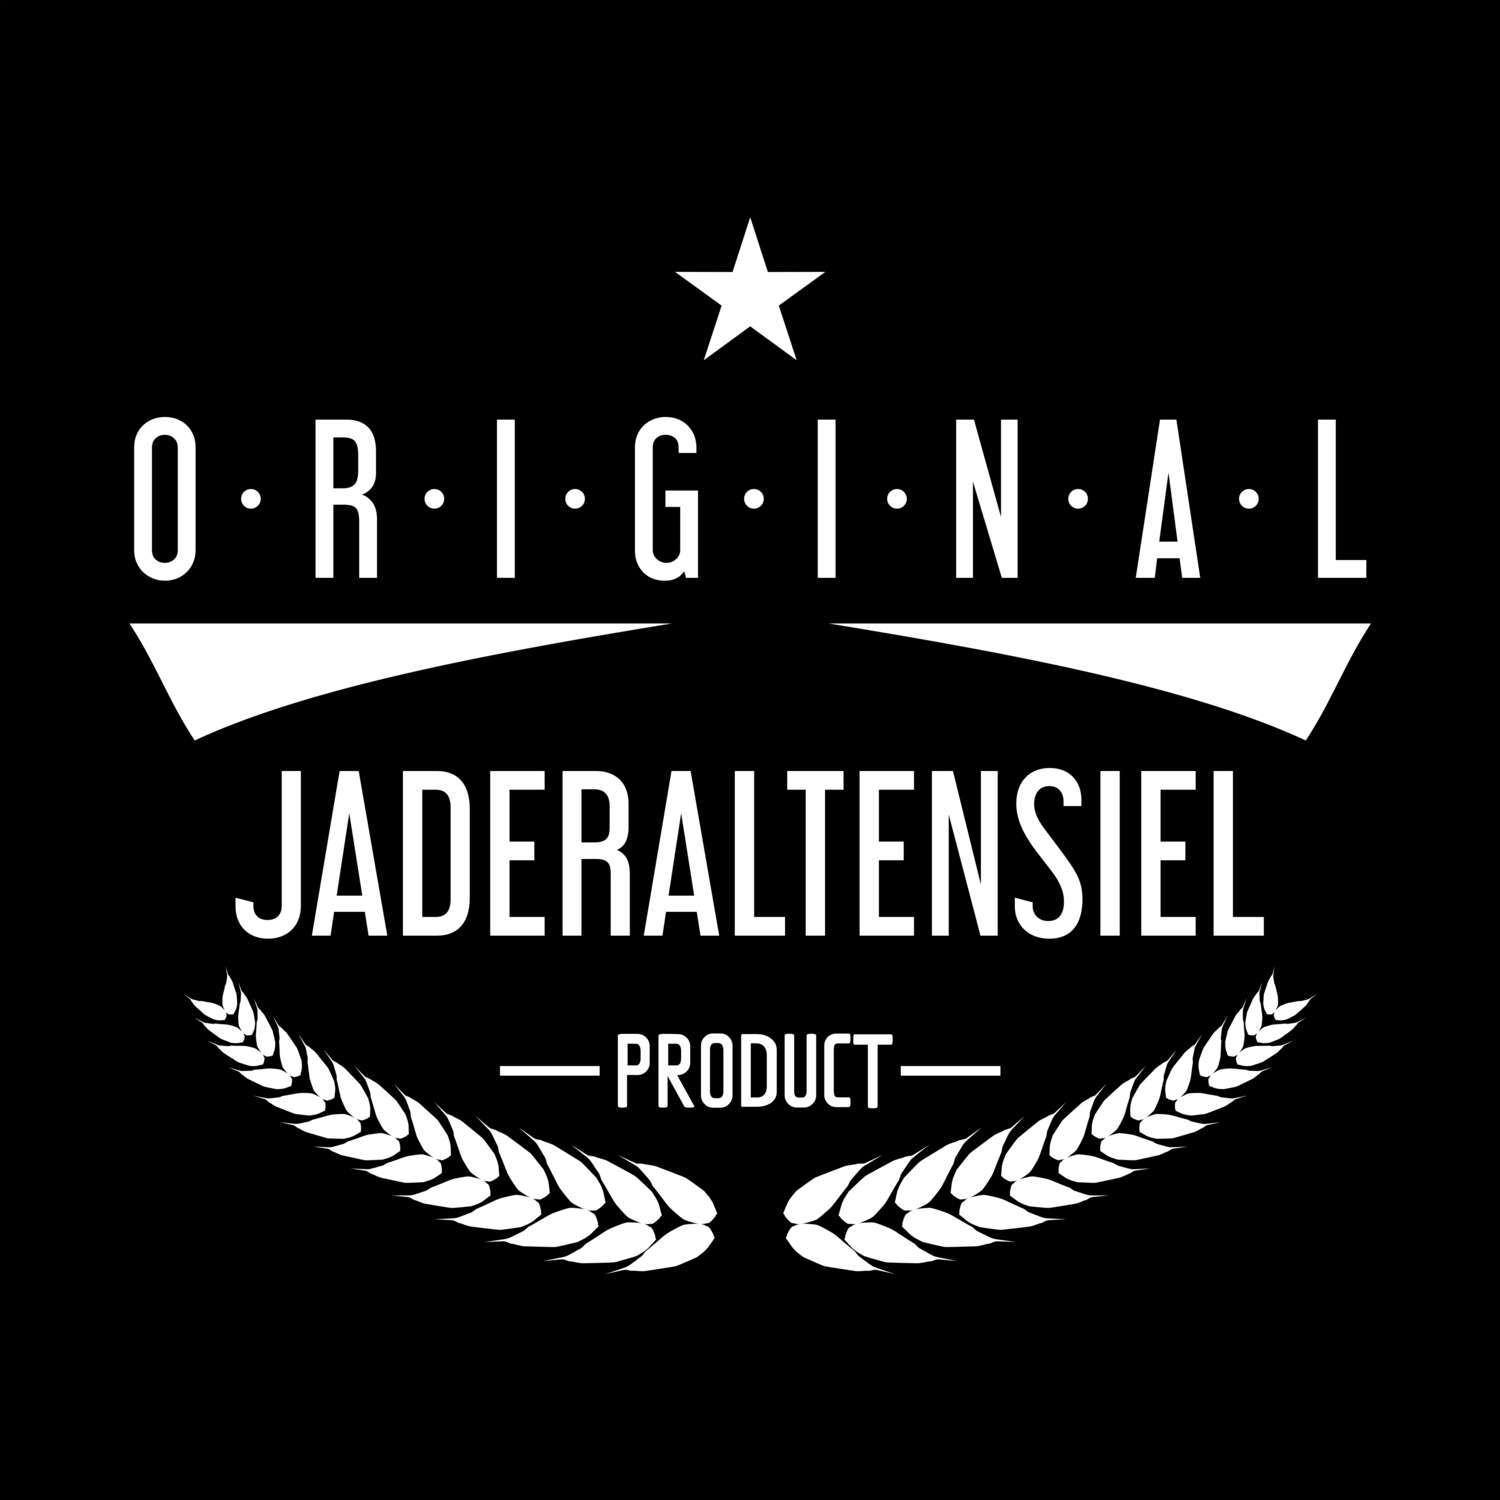 Jaderaltensiel T-Shirt »Original Product«